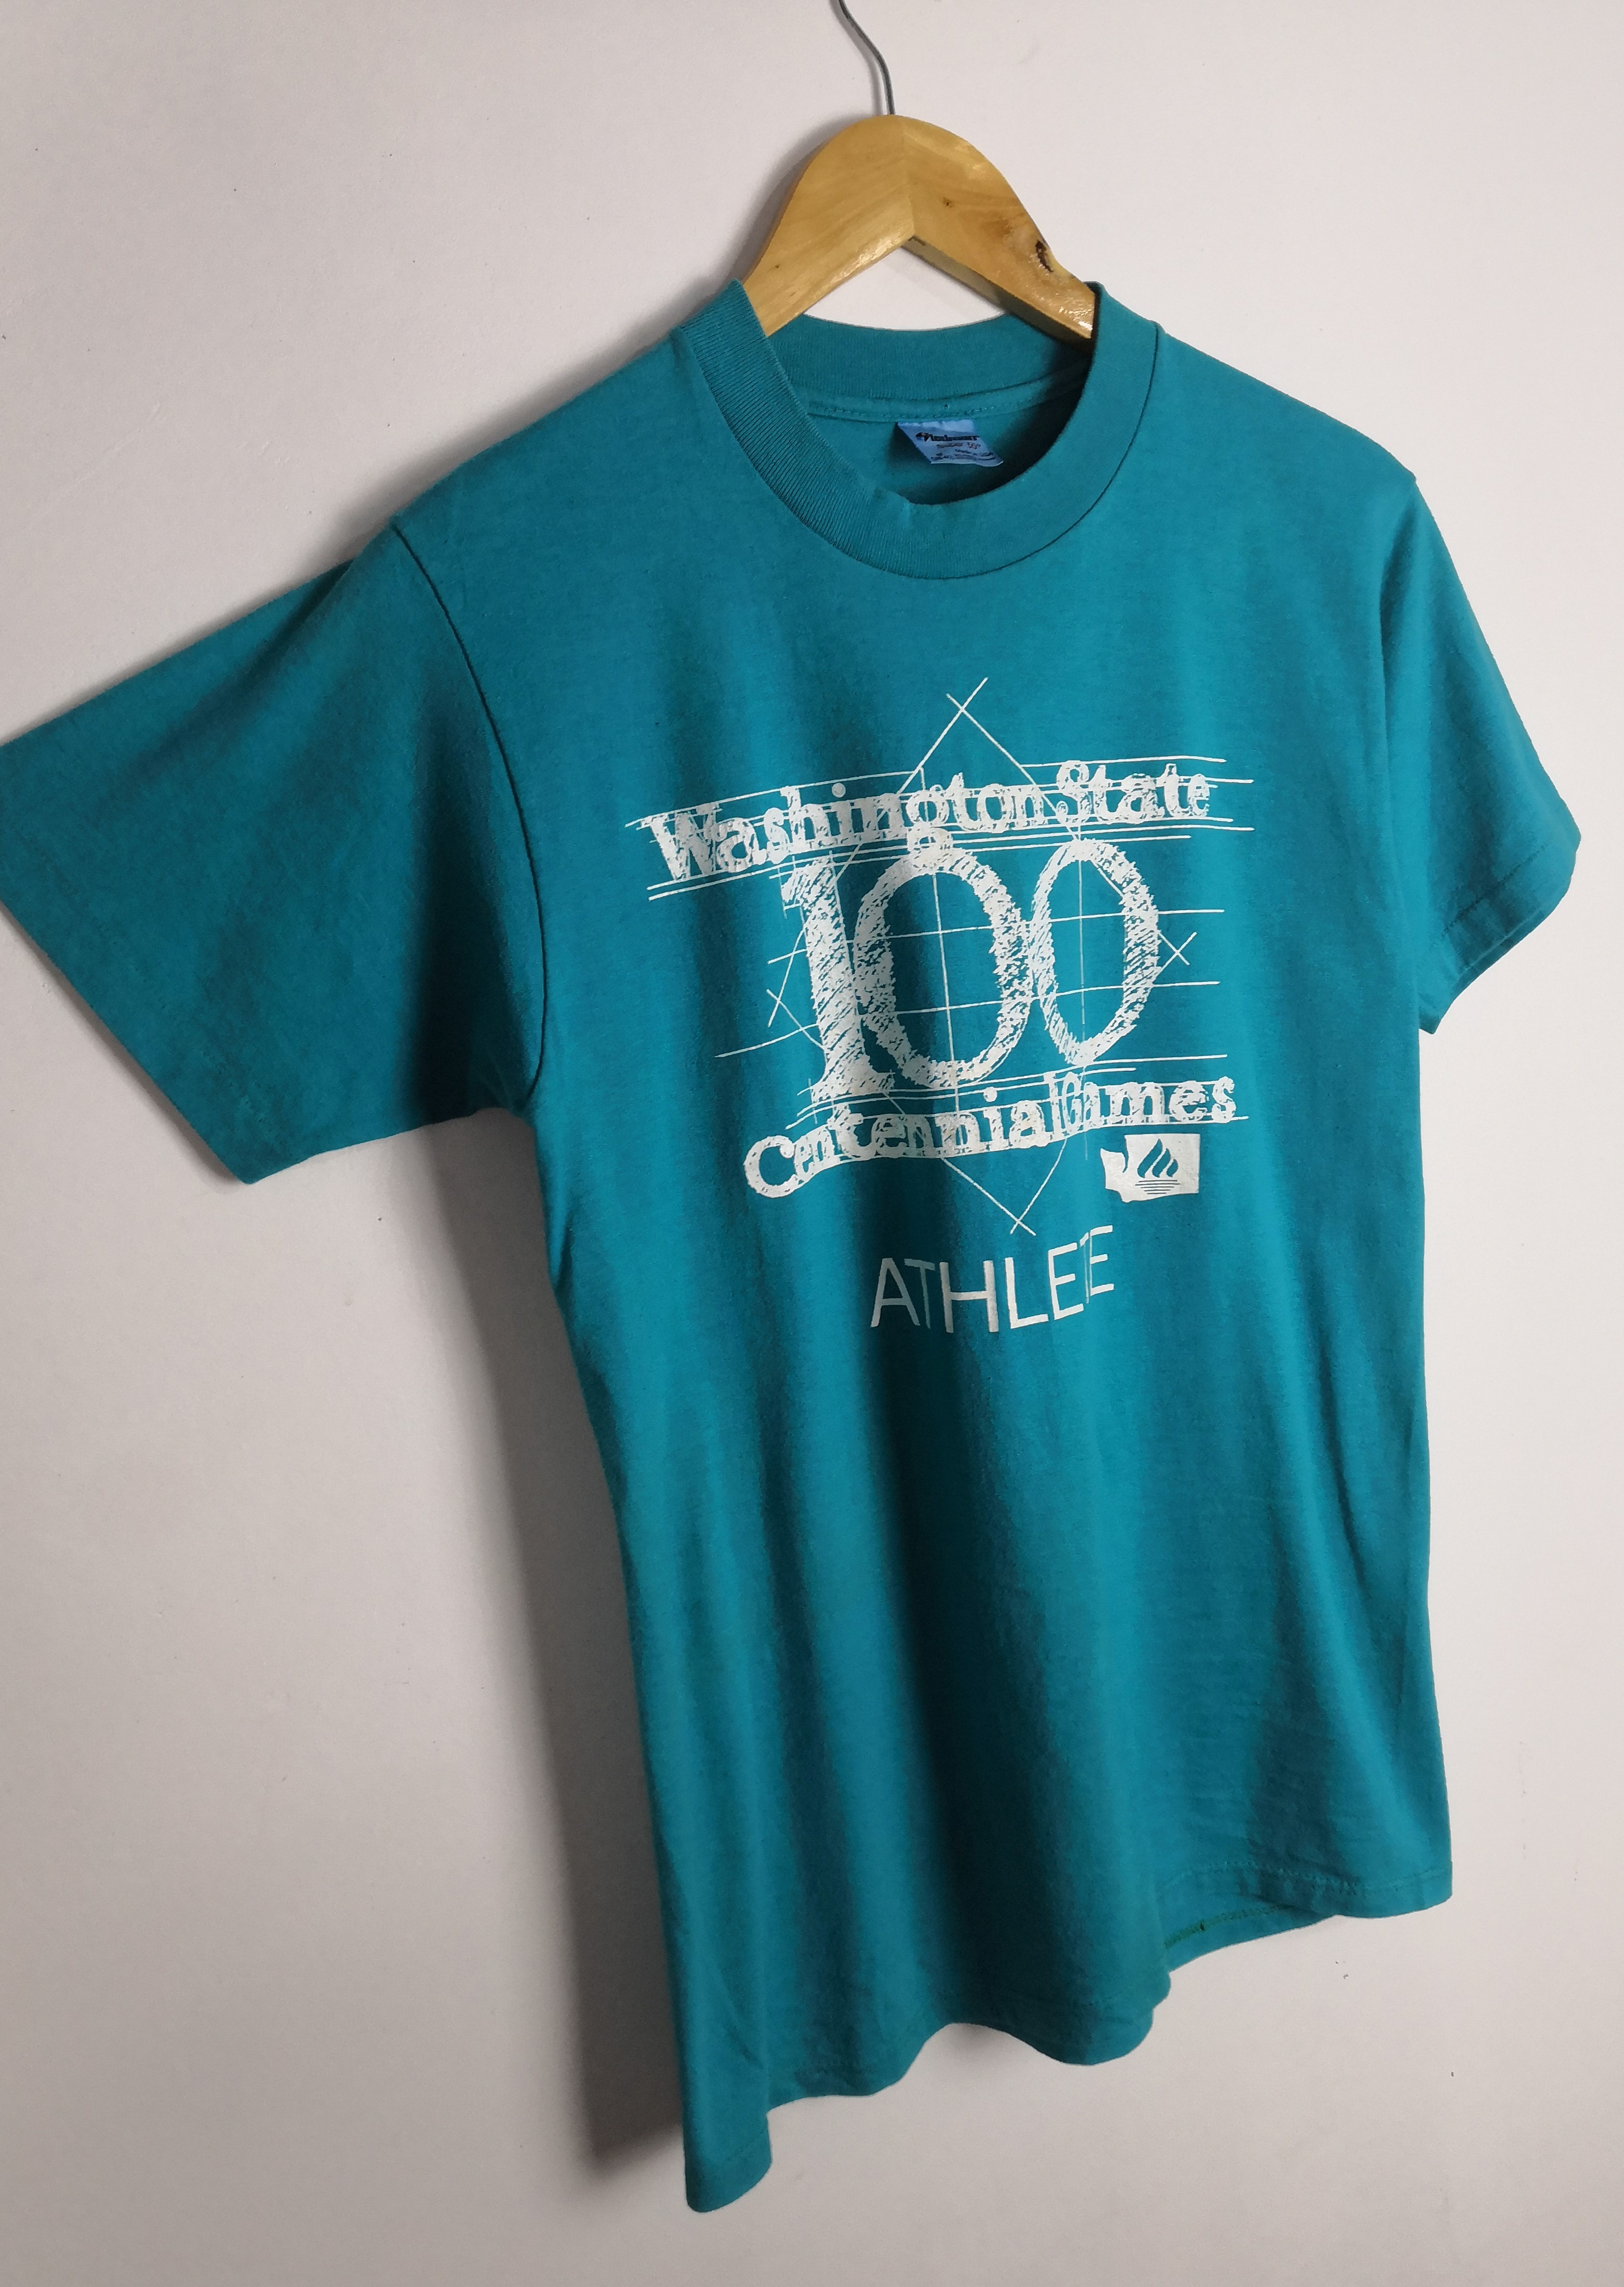 Vintage - True Vintage 90s Washington State Shirt 100 Centennial Games Athlete. - 2